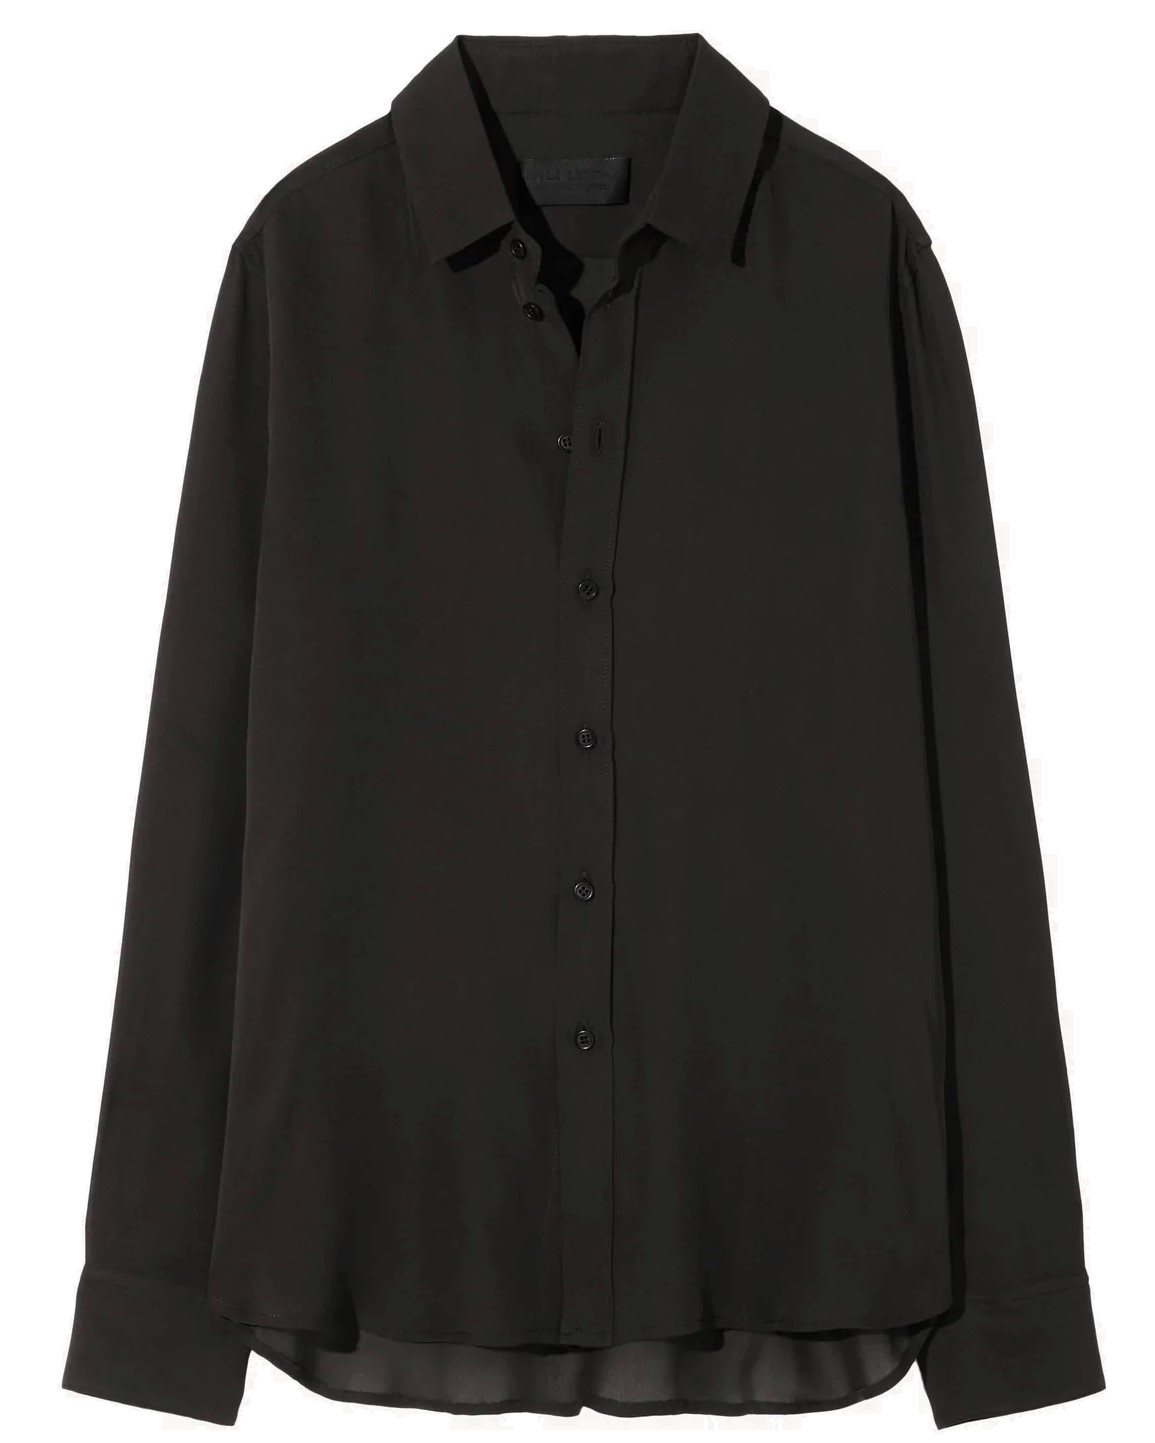 NILI LOTAN Gaia Slim Shirt in Black Silk